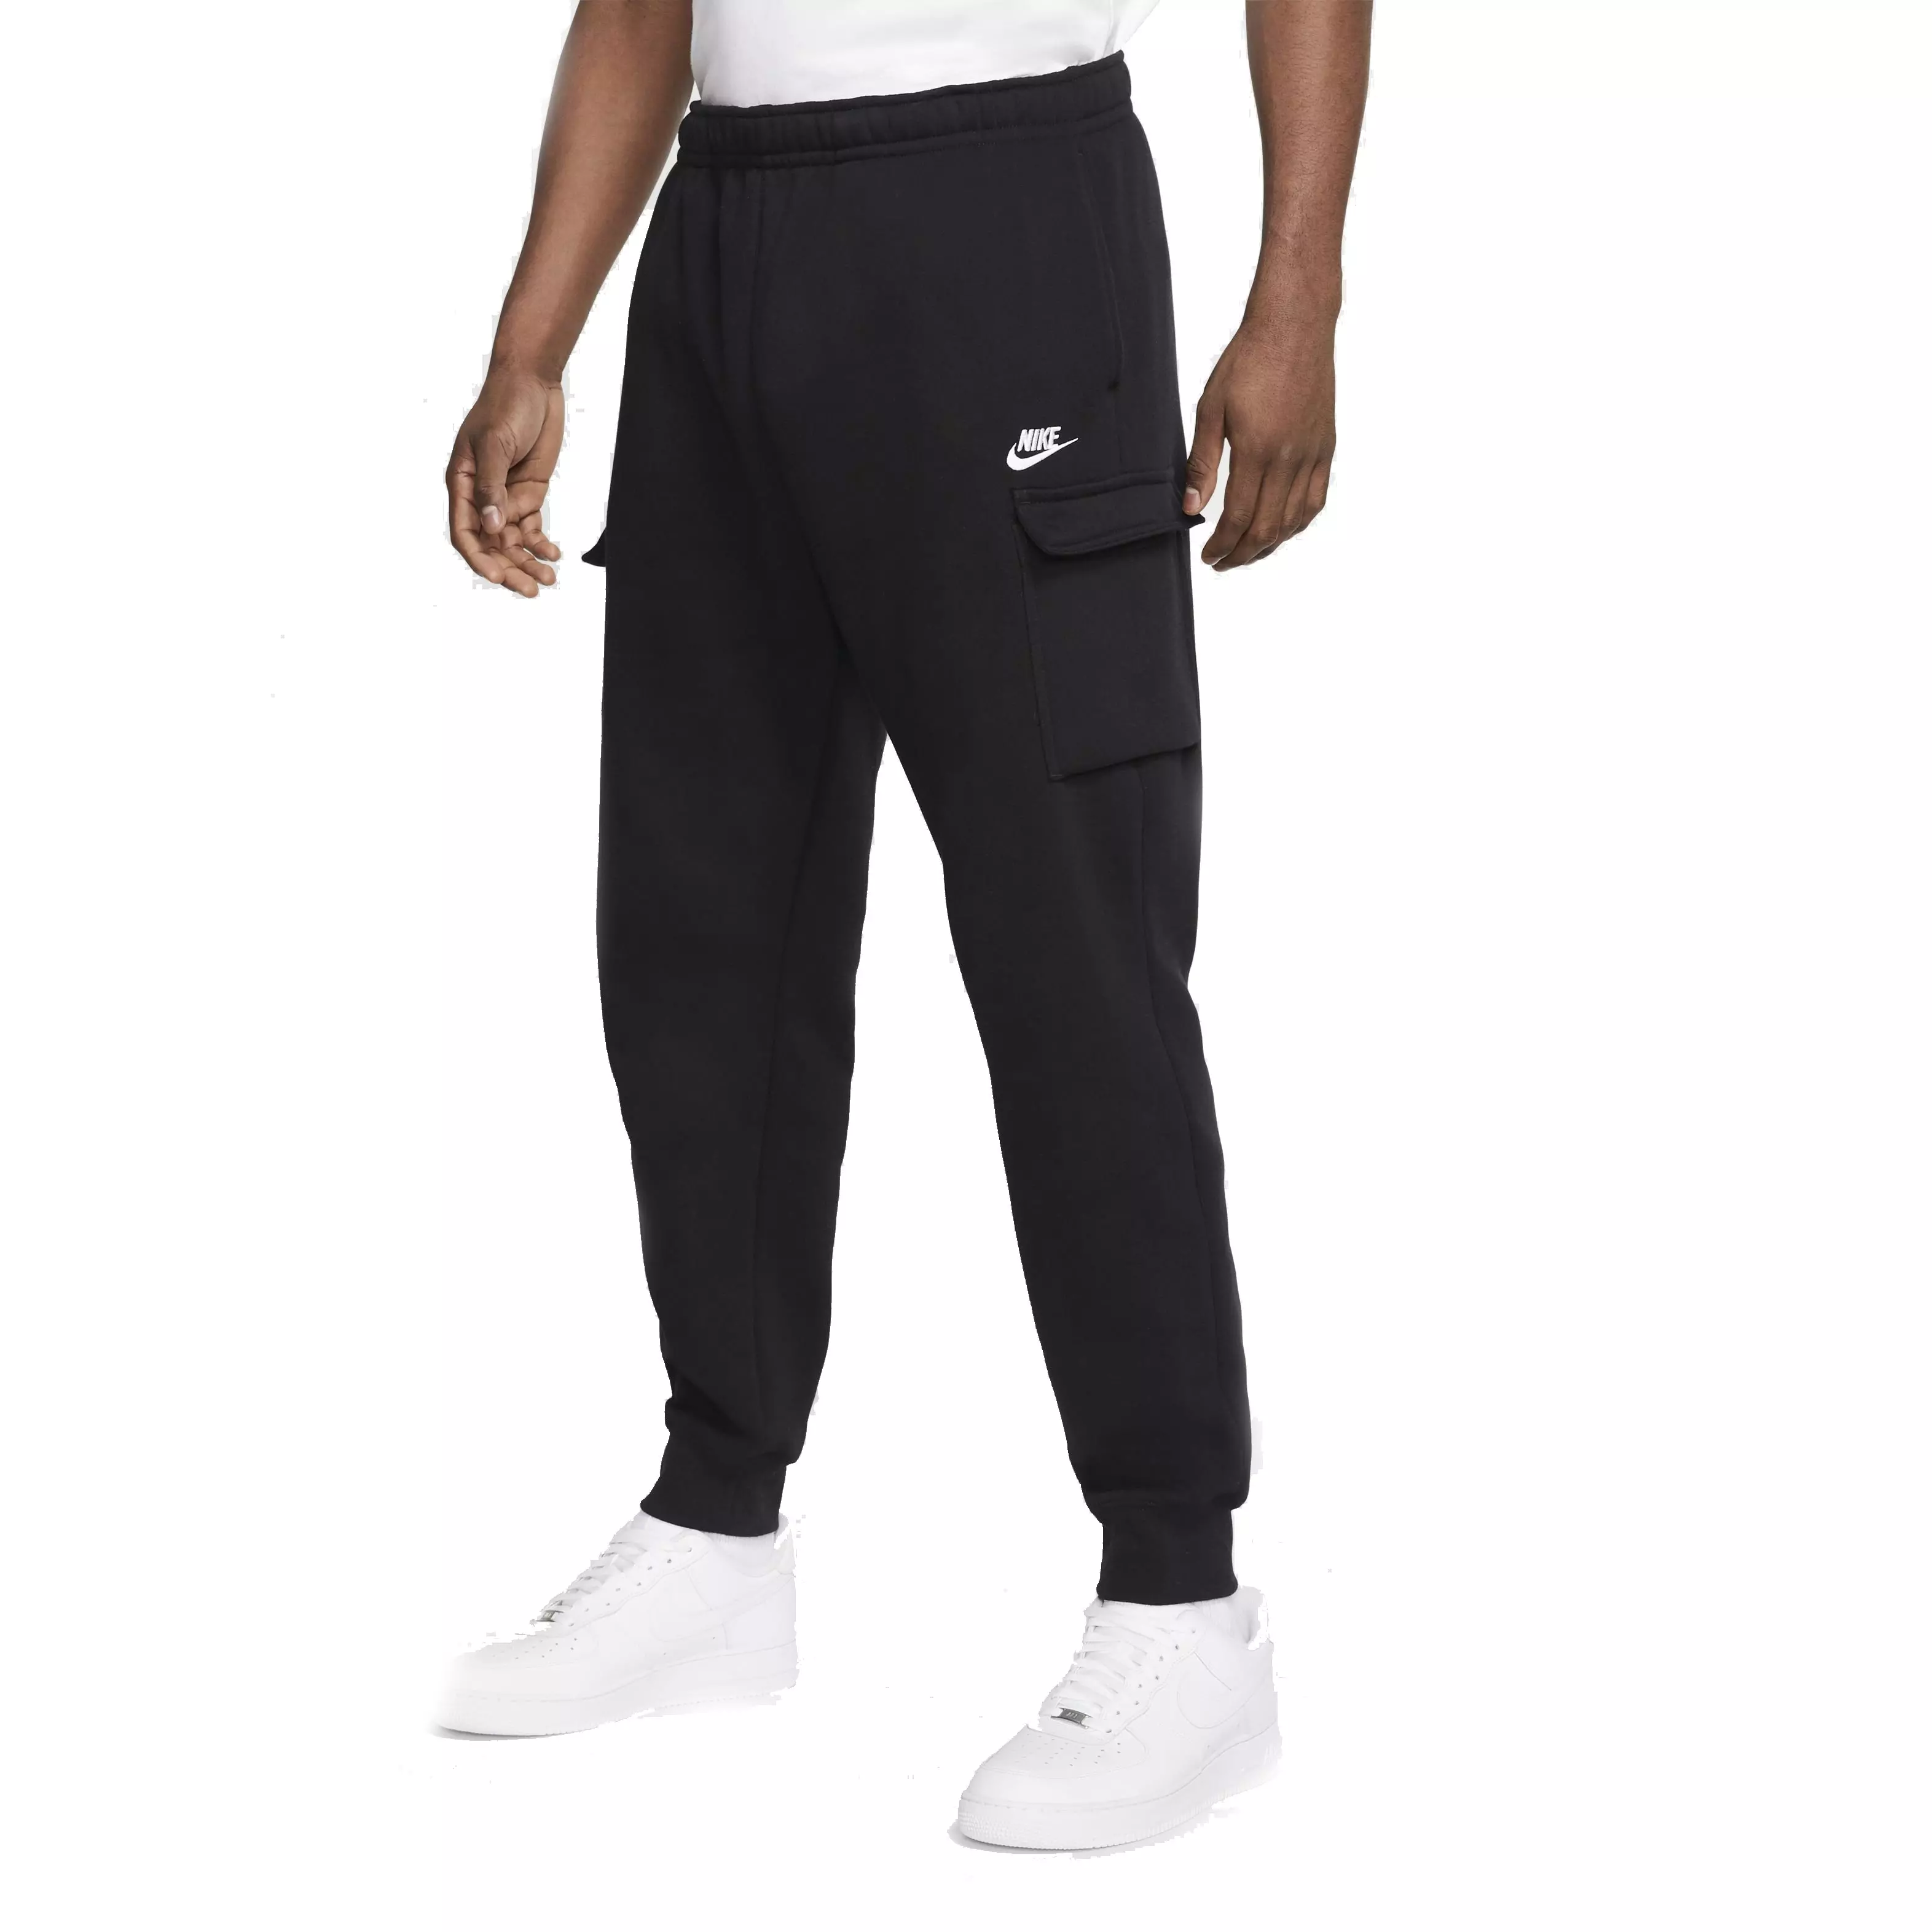 Nike Sweatpants Mens XL Iron Grey Polyester Black Swoosh Baggy